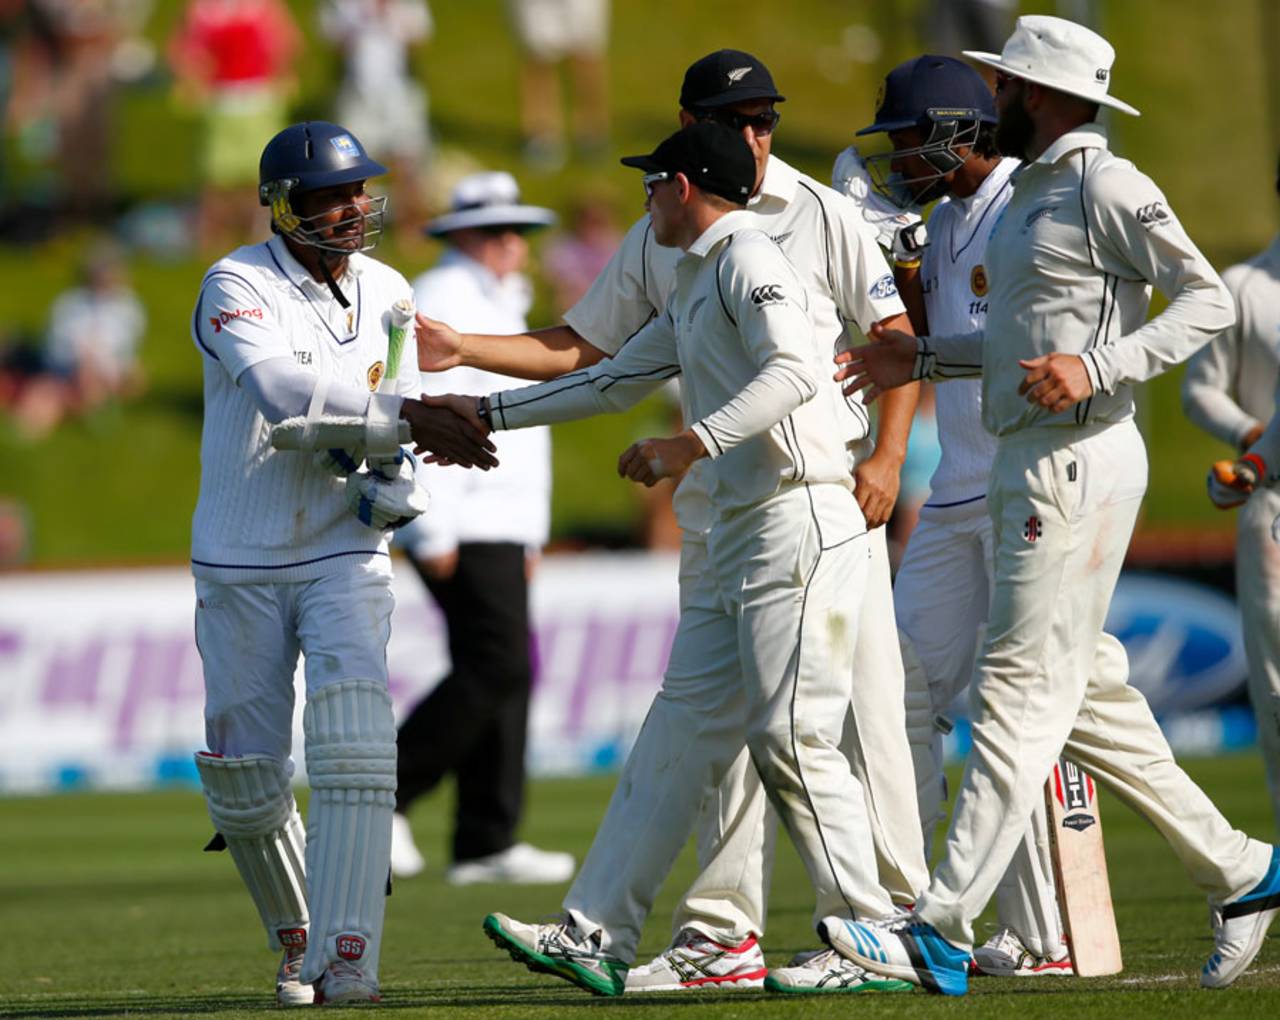 The New Zealand players congratulate Kumar Sangakkara after he is dismissed for 203, New Zealand v Sri Lanka, 2nd Test, Wellington, 2nd day, January 4, 2015